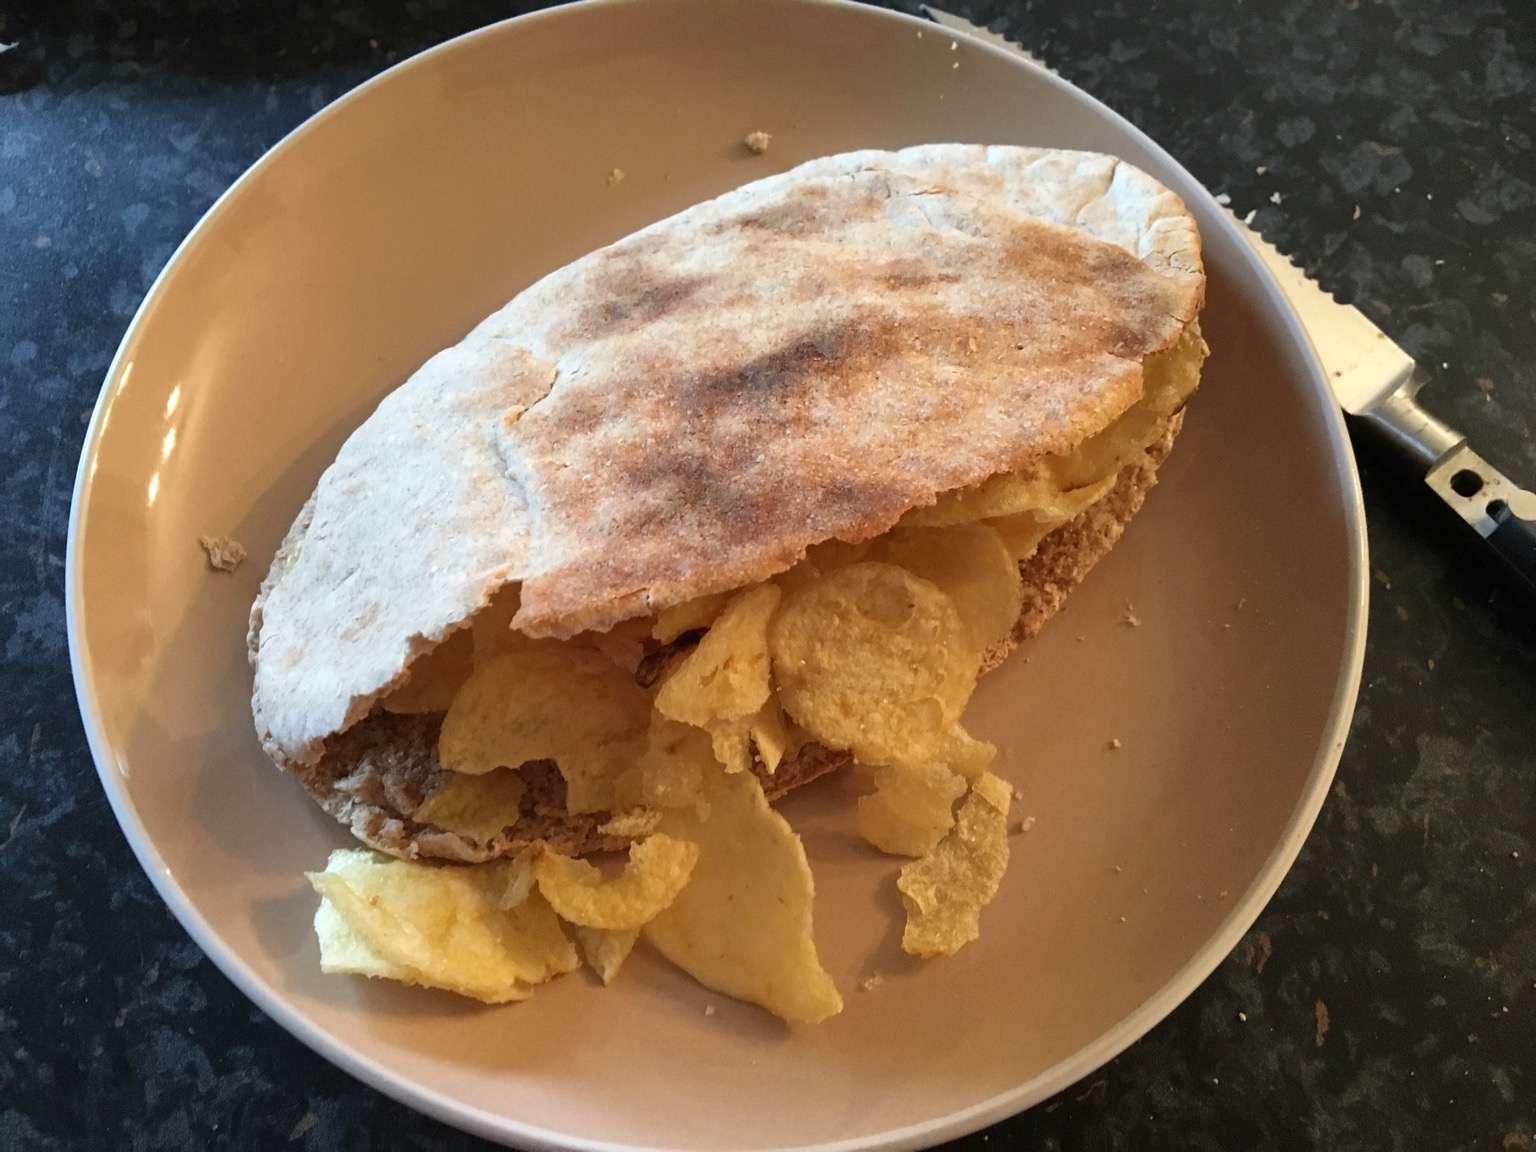 Wholemeal pita bread containing potato crisps